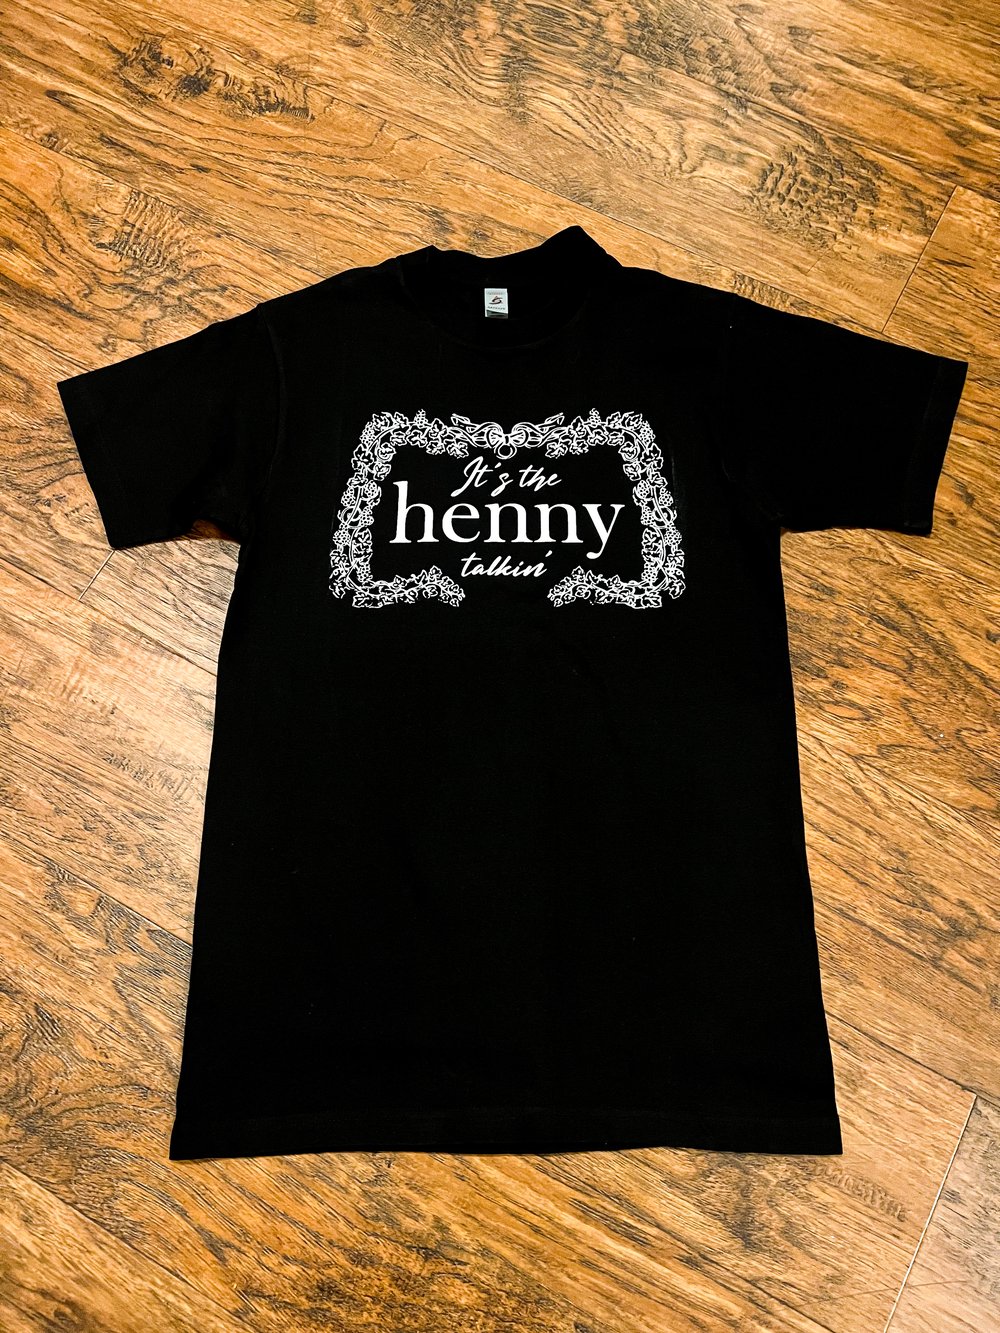 Image of “It’s the Henny talkin” Men’s t-shirt